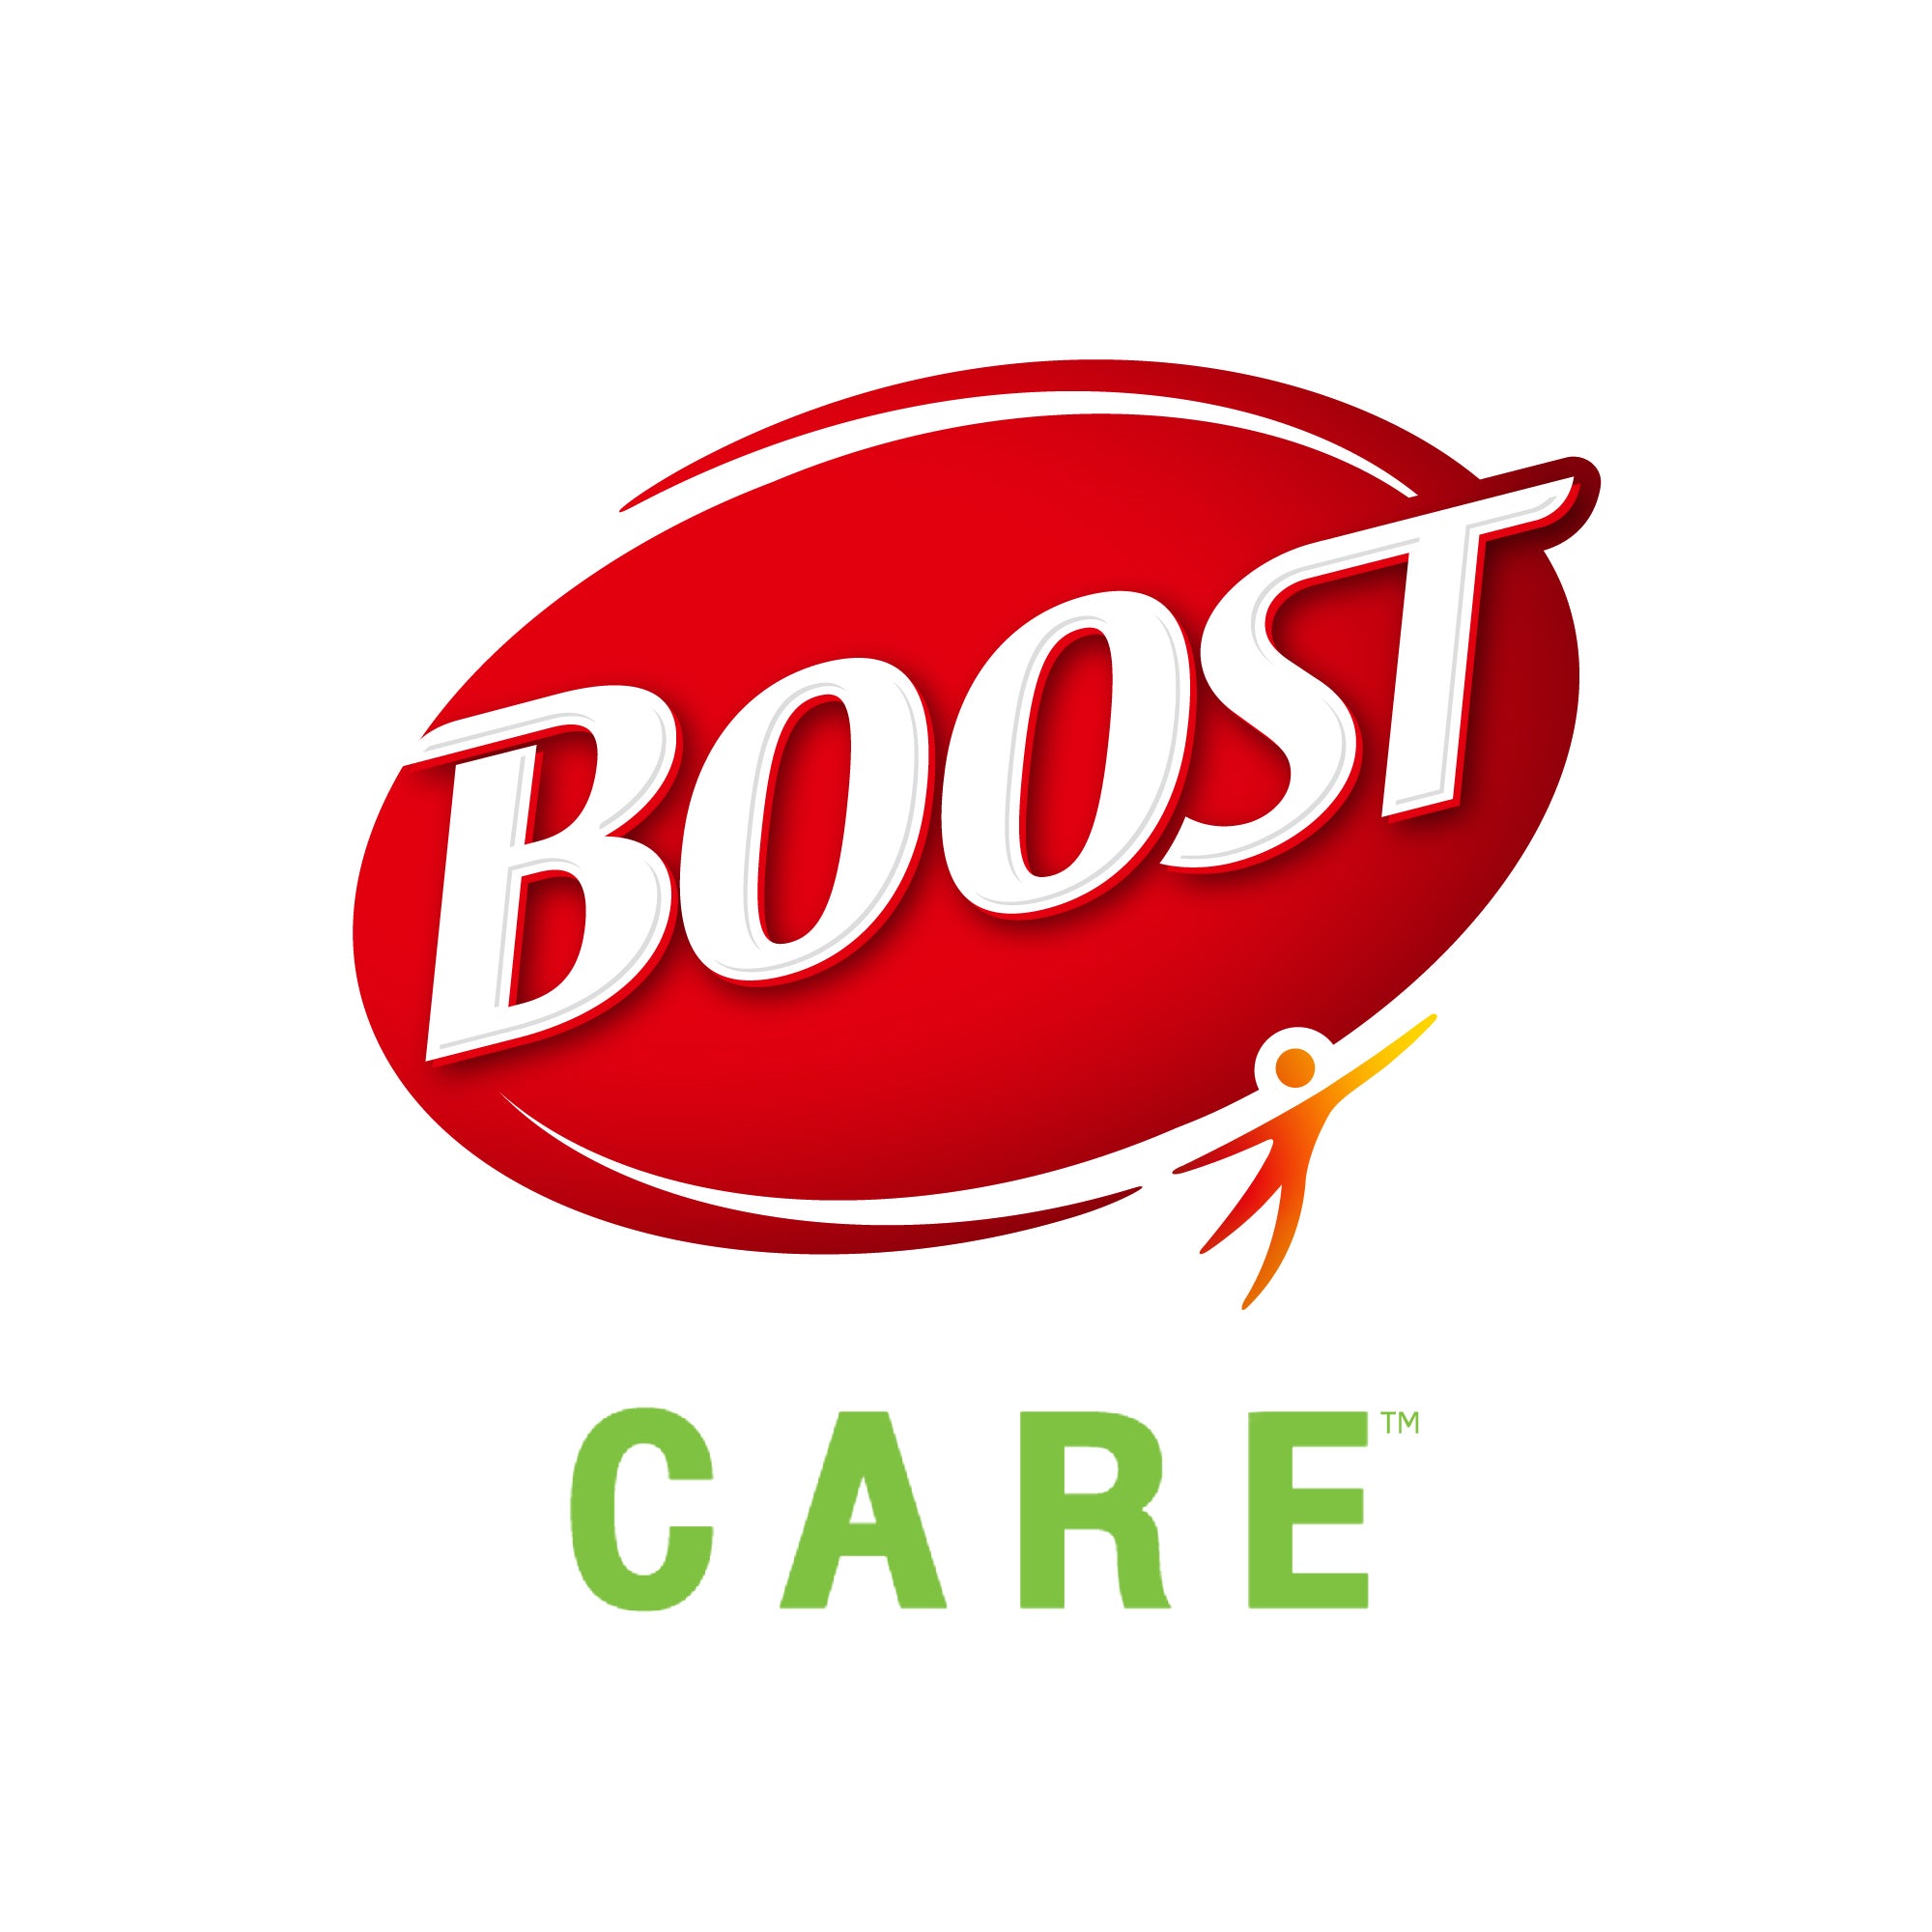 Boost Care, บูสท์แคร์ ไม่เติมน้ำตาลทราย